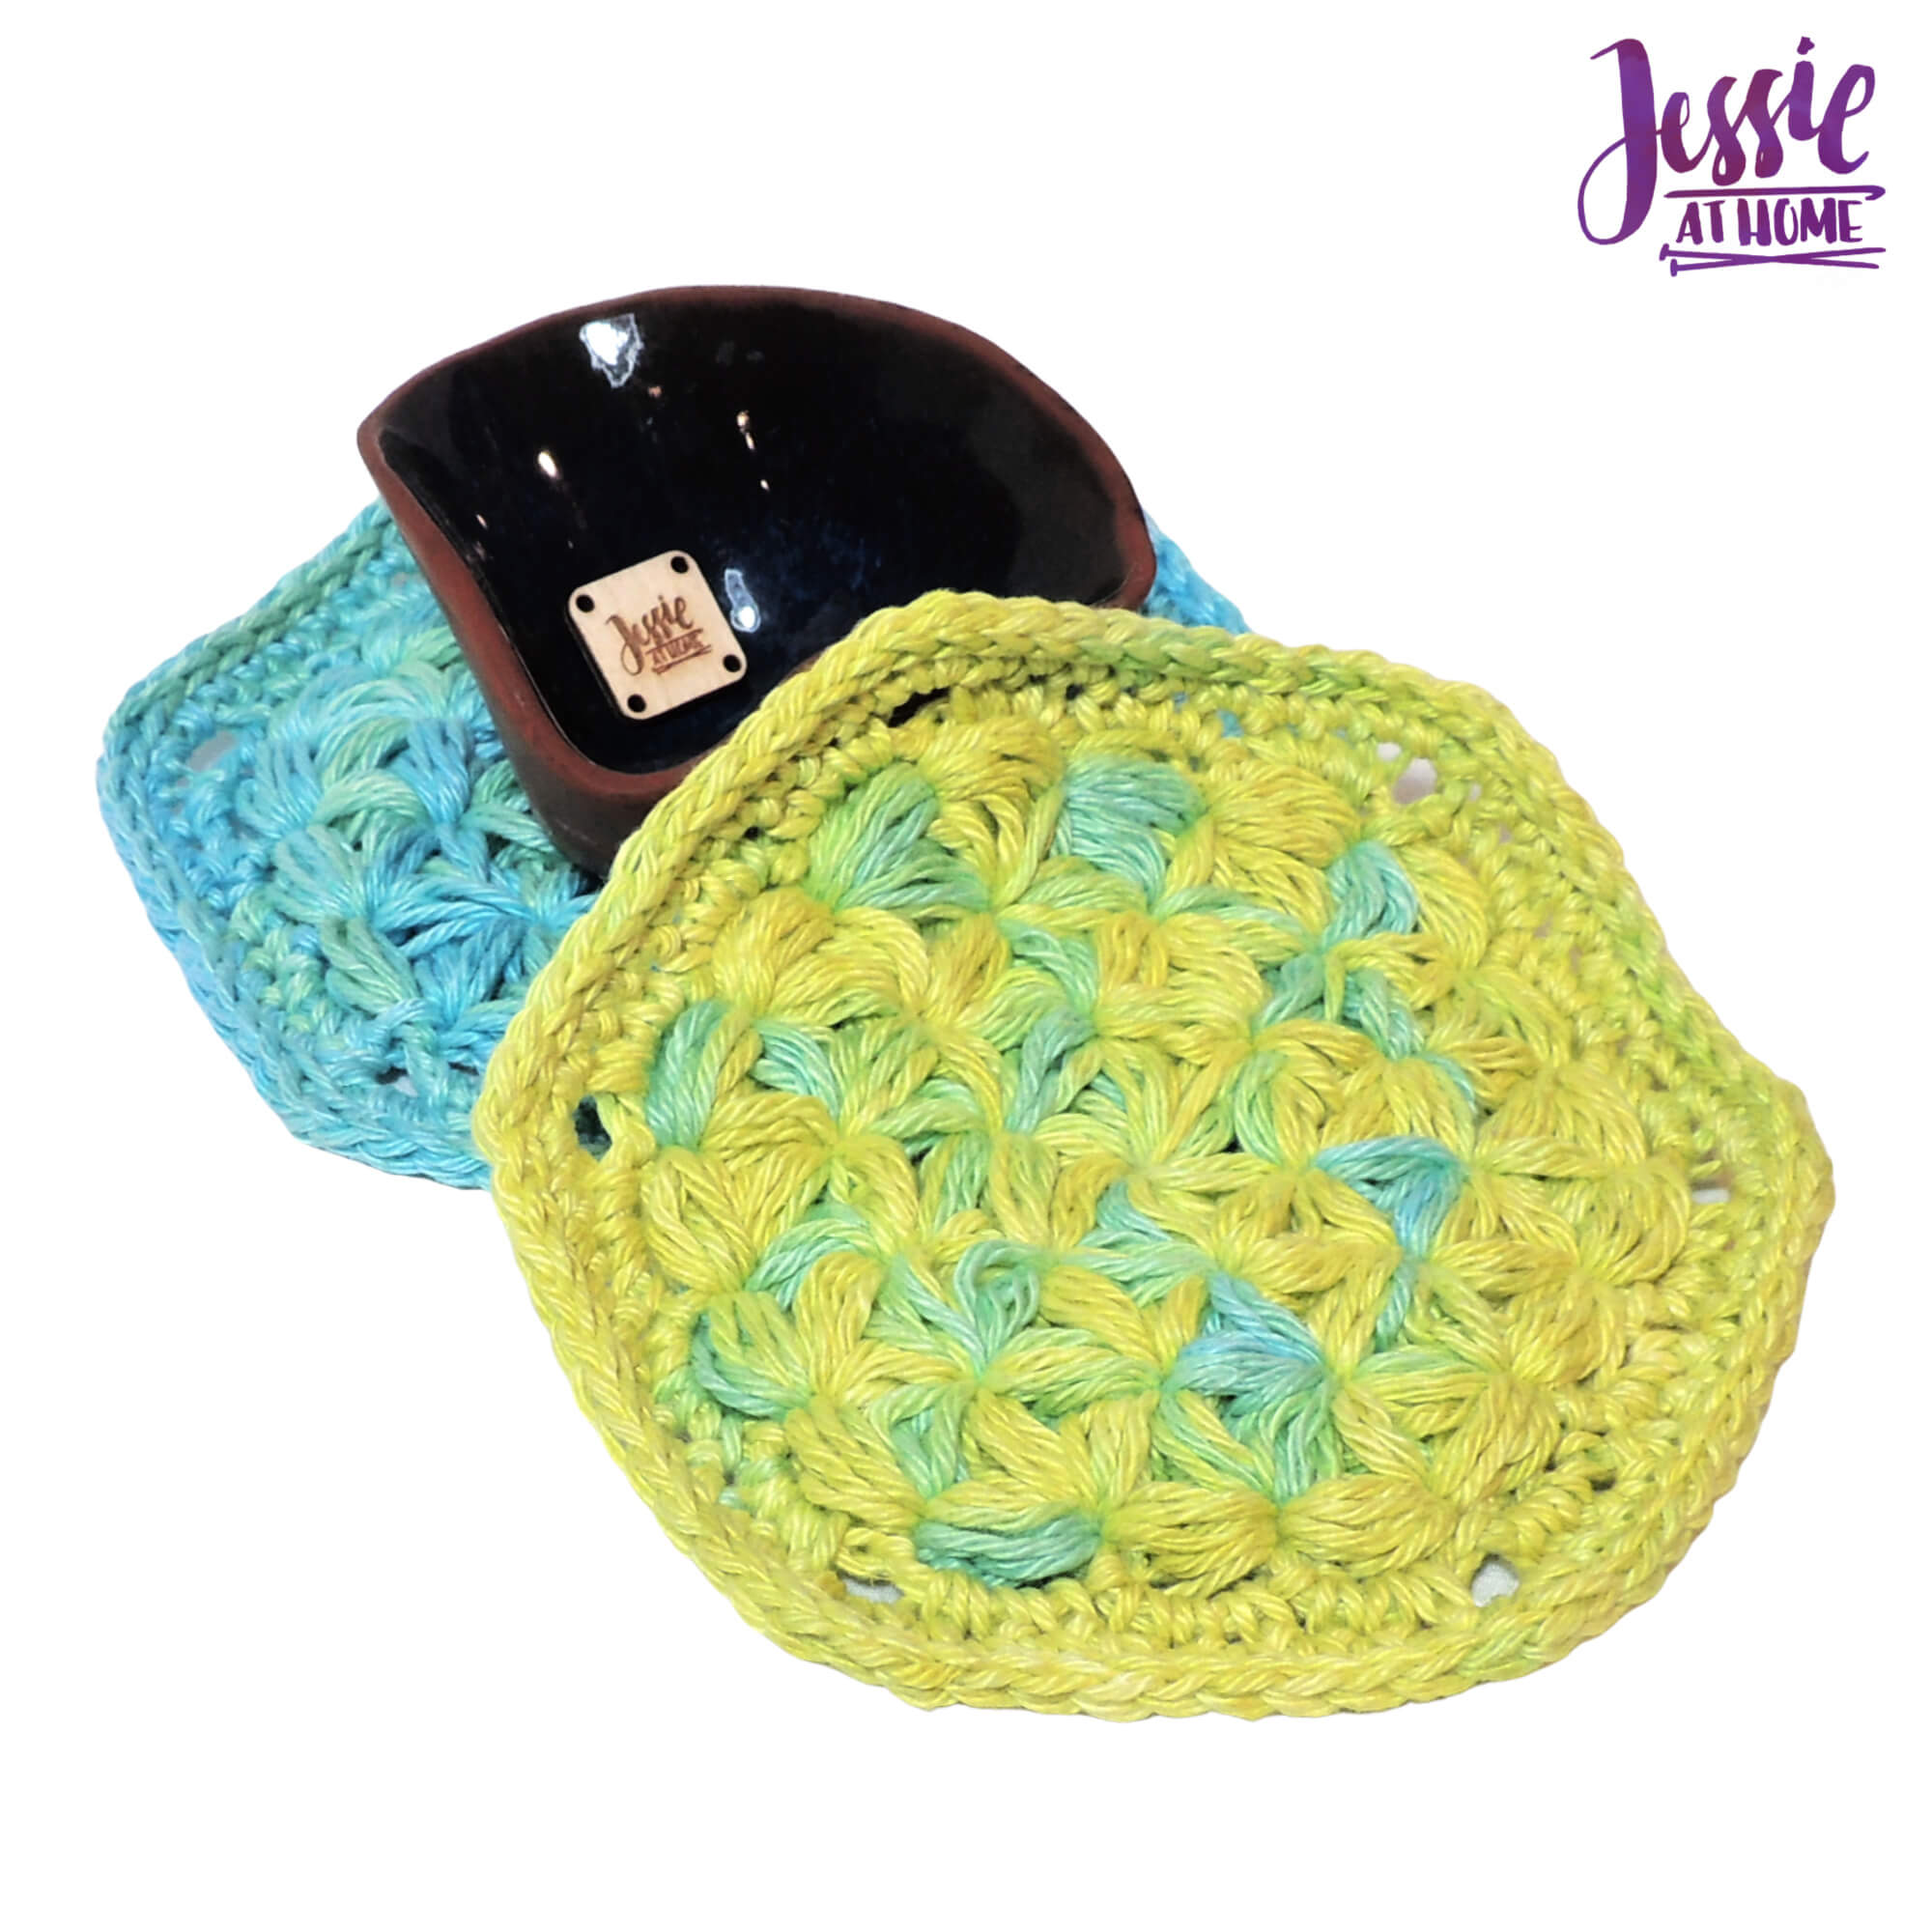 Turkish Lif Scrubby crochet pattern by Jessie At Home - 2